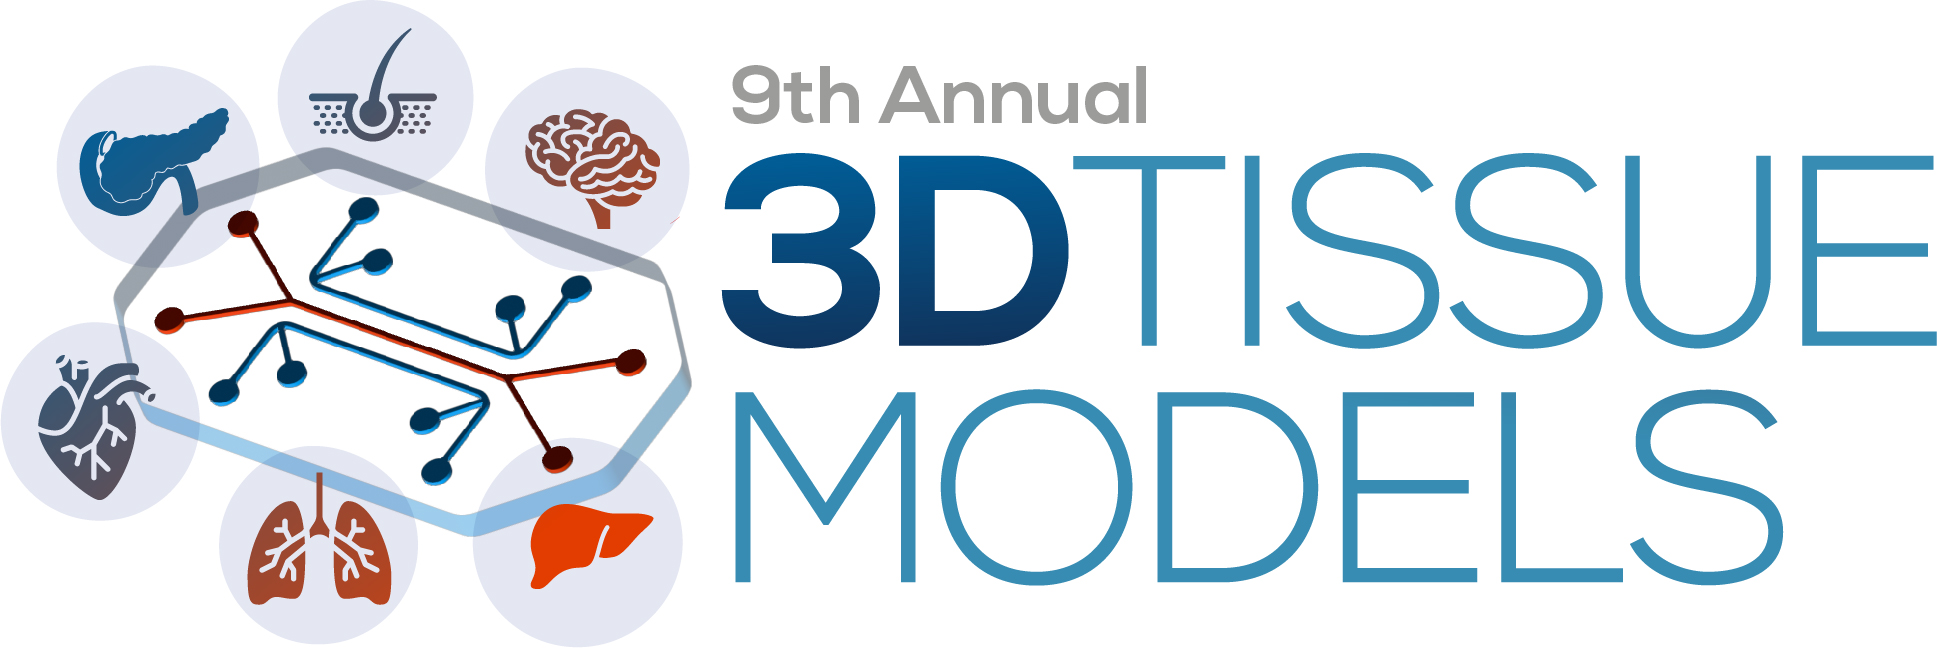 9th 3D Tissue Models Summit logo